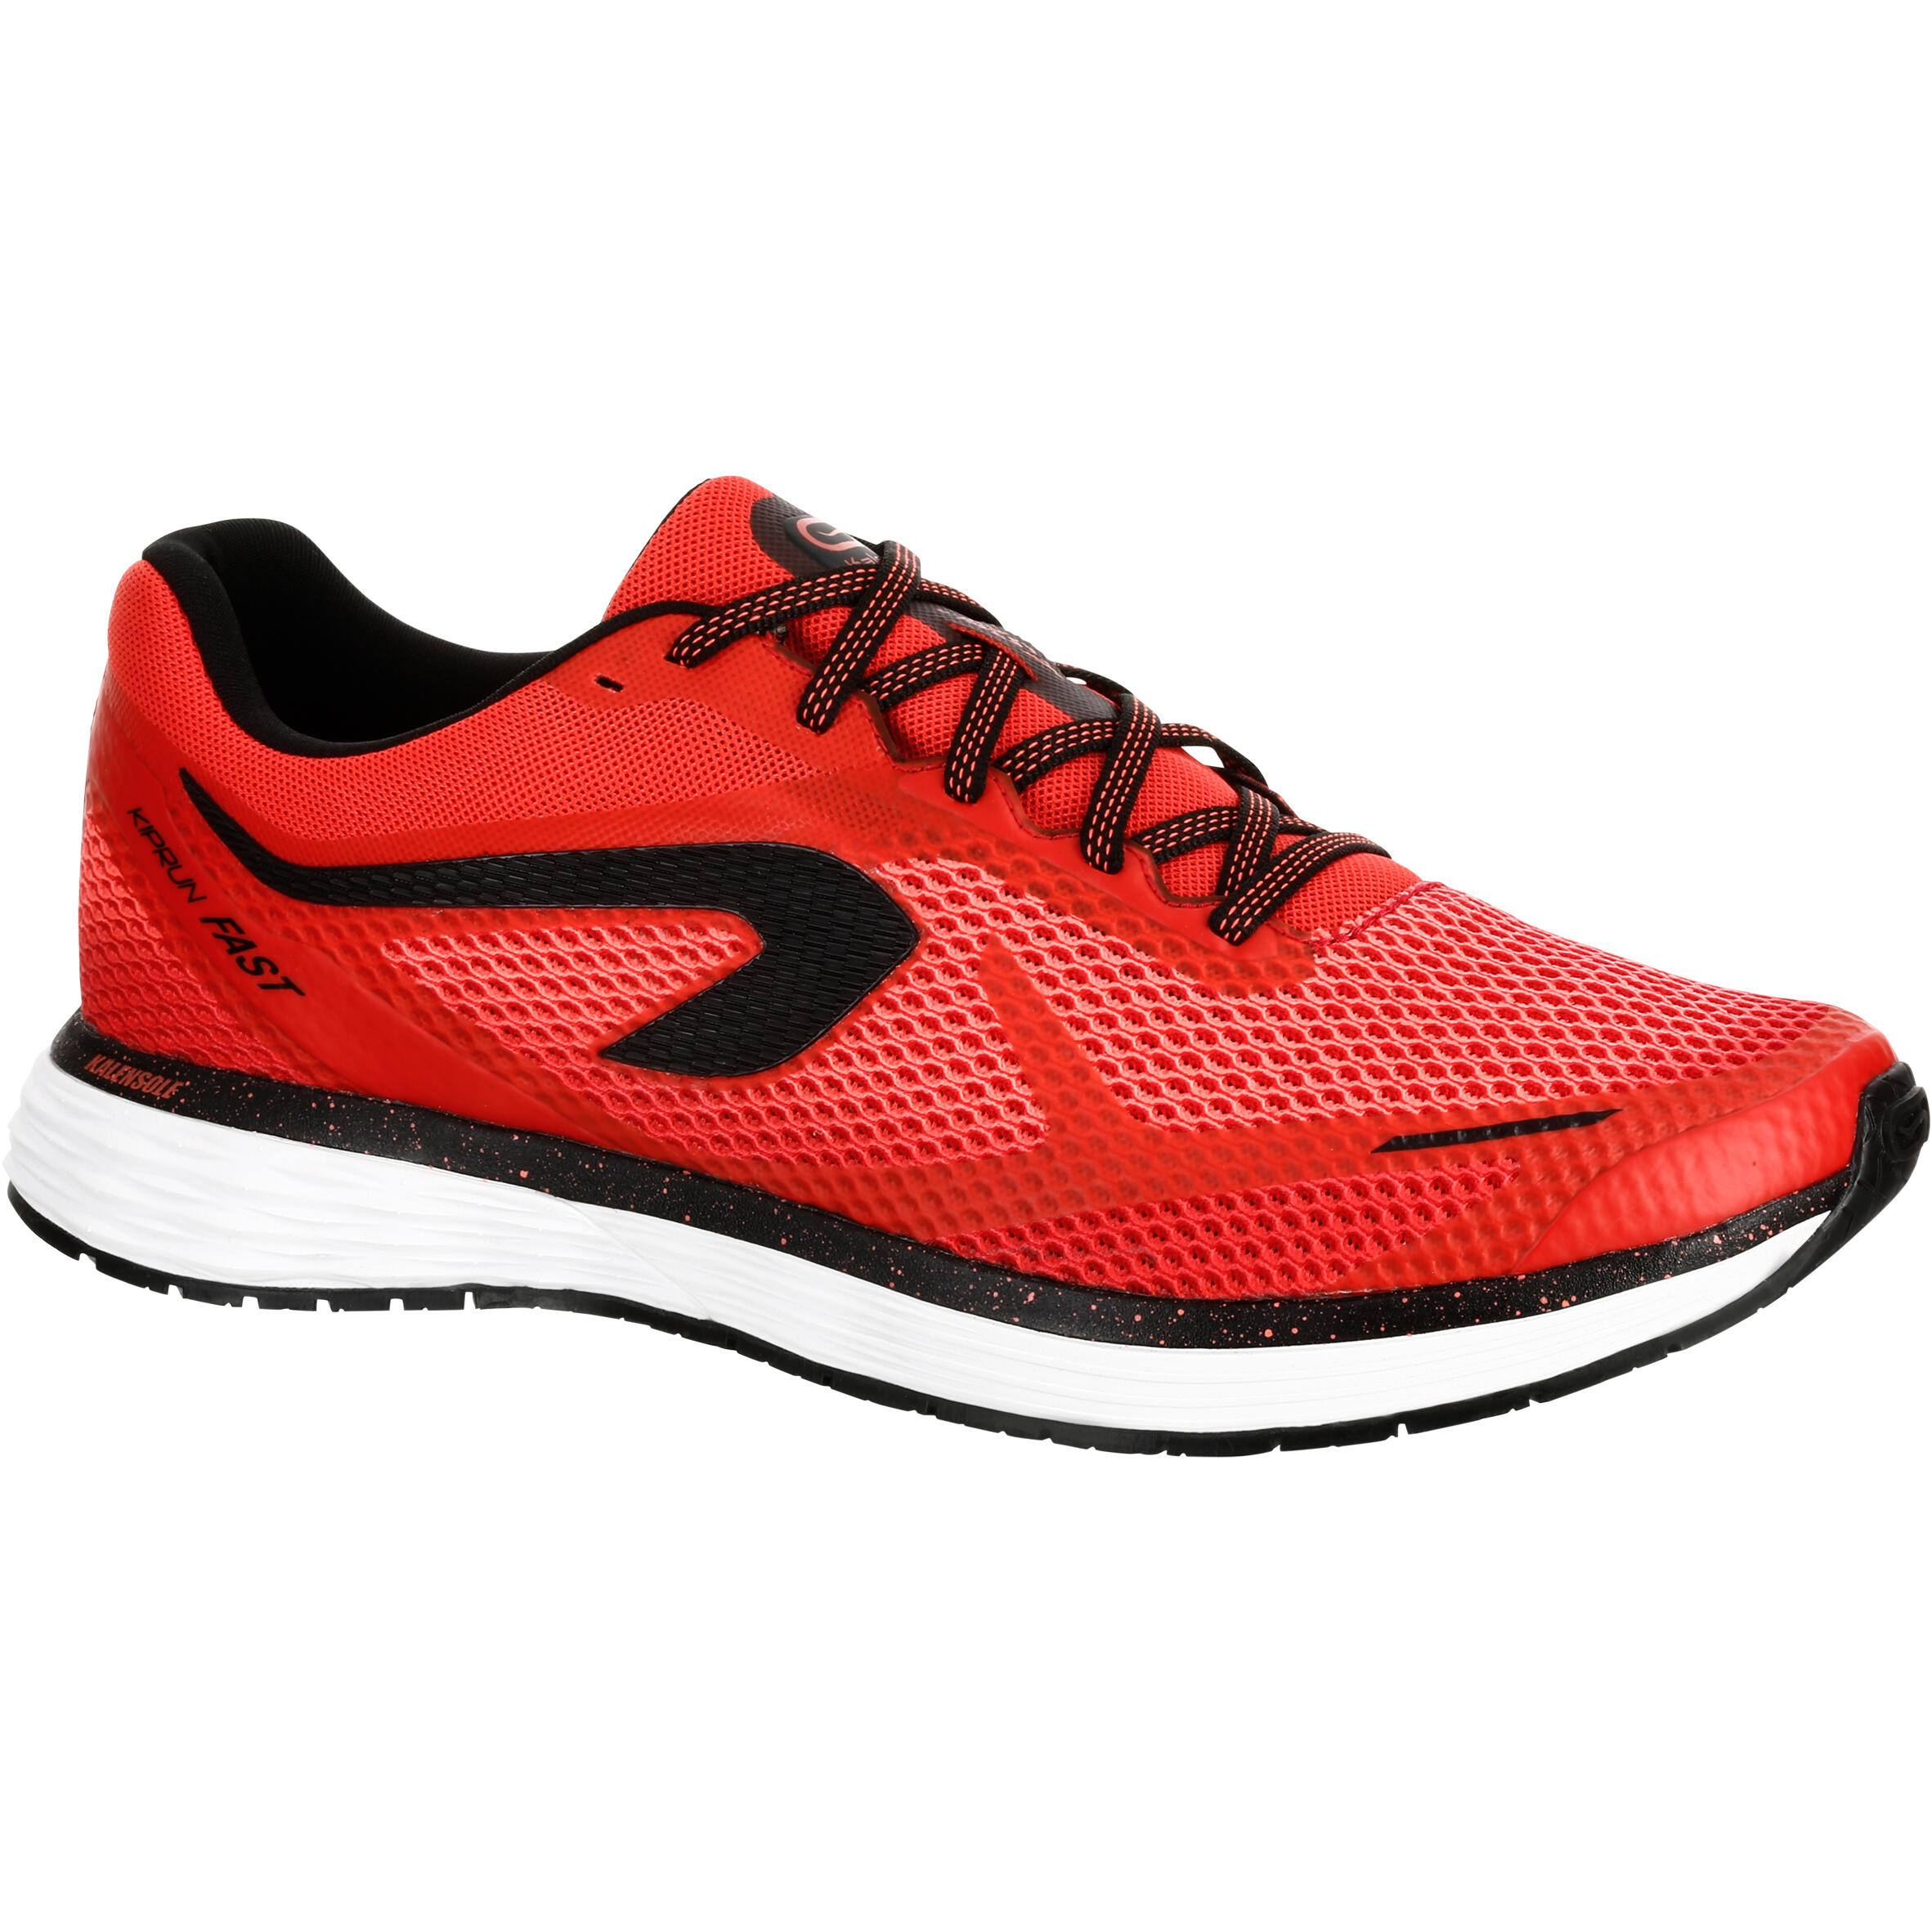 KIPRUN Kiprun Fast Men's Running Shoes - Red/Black